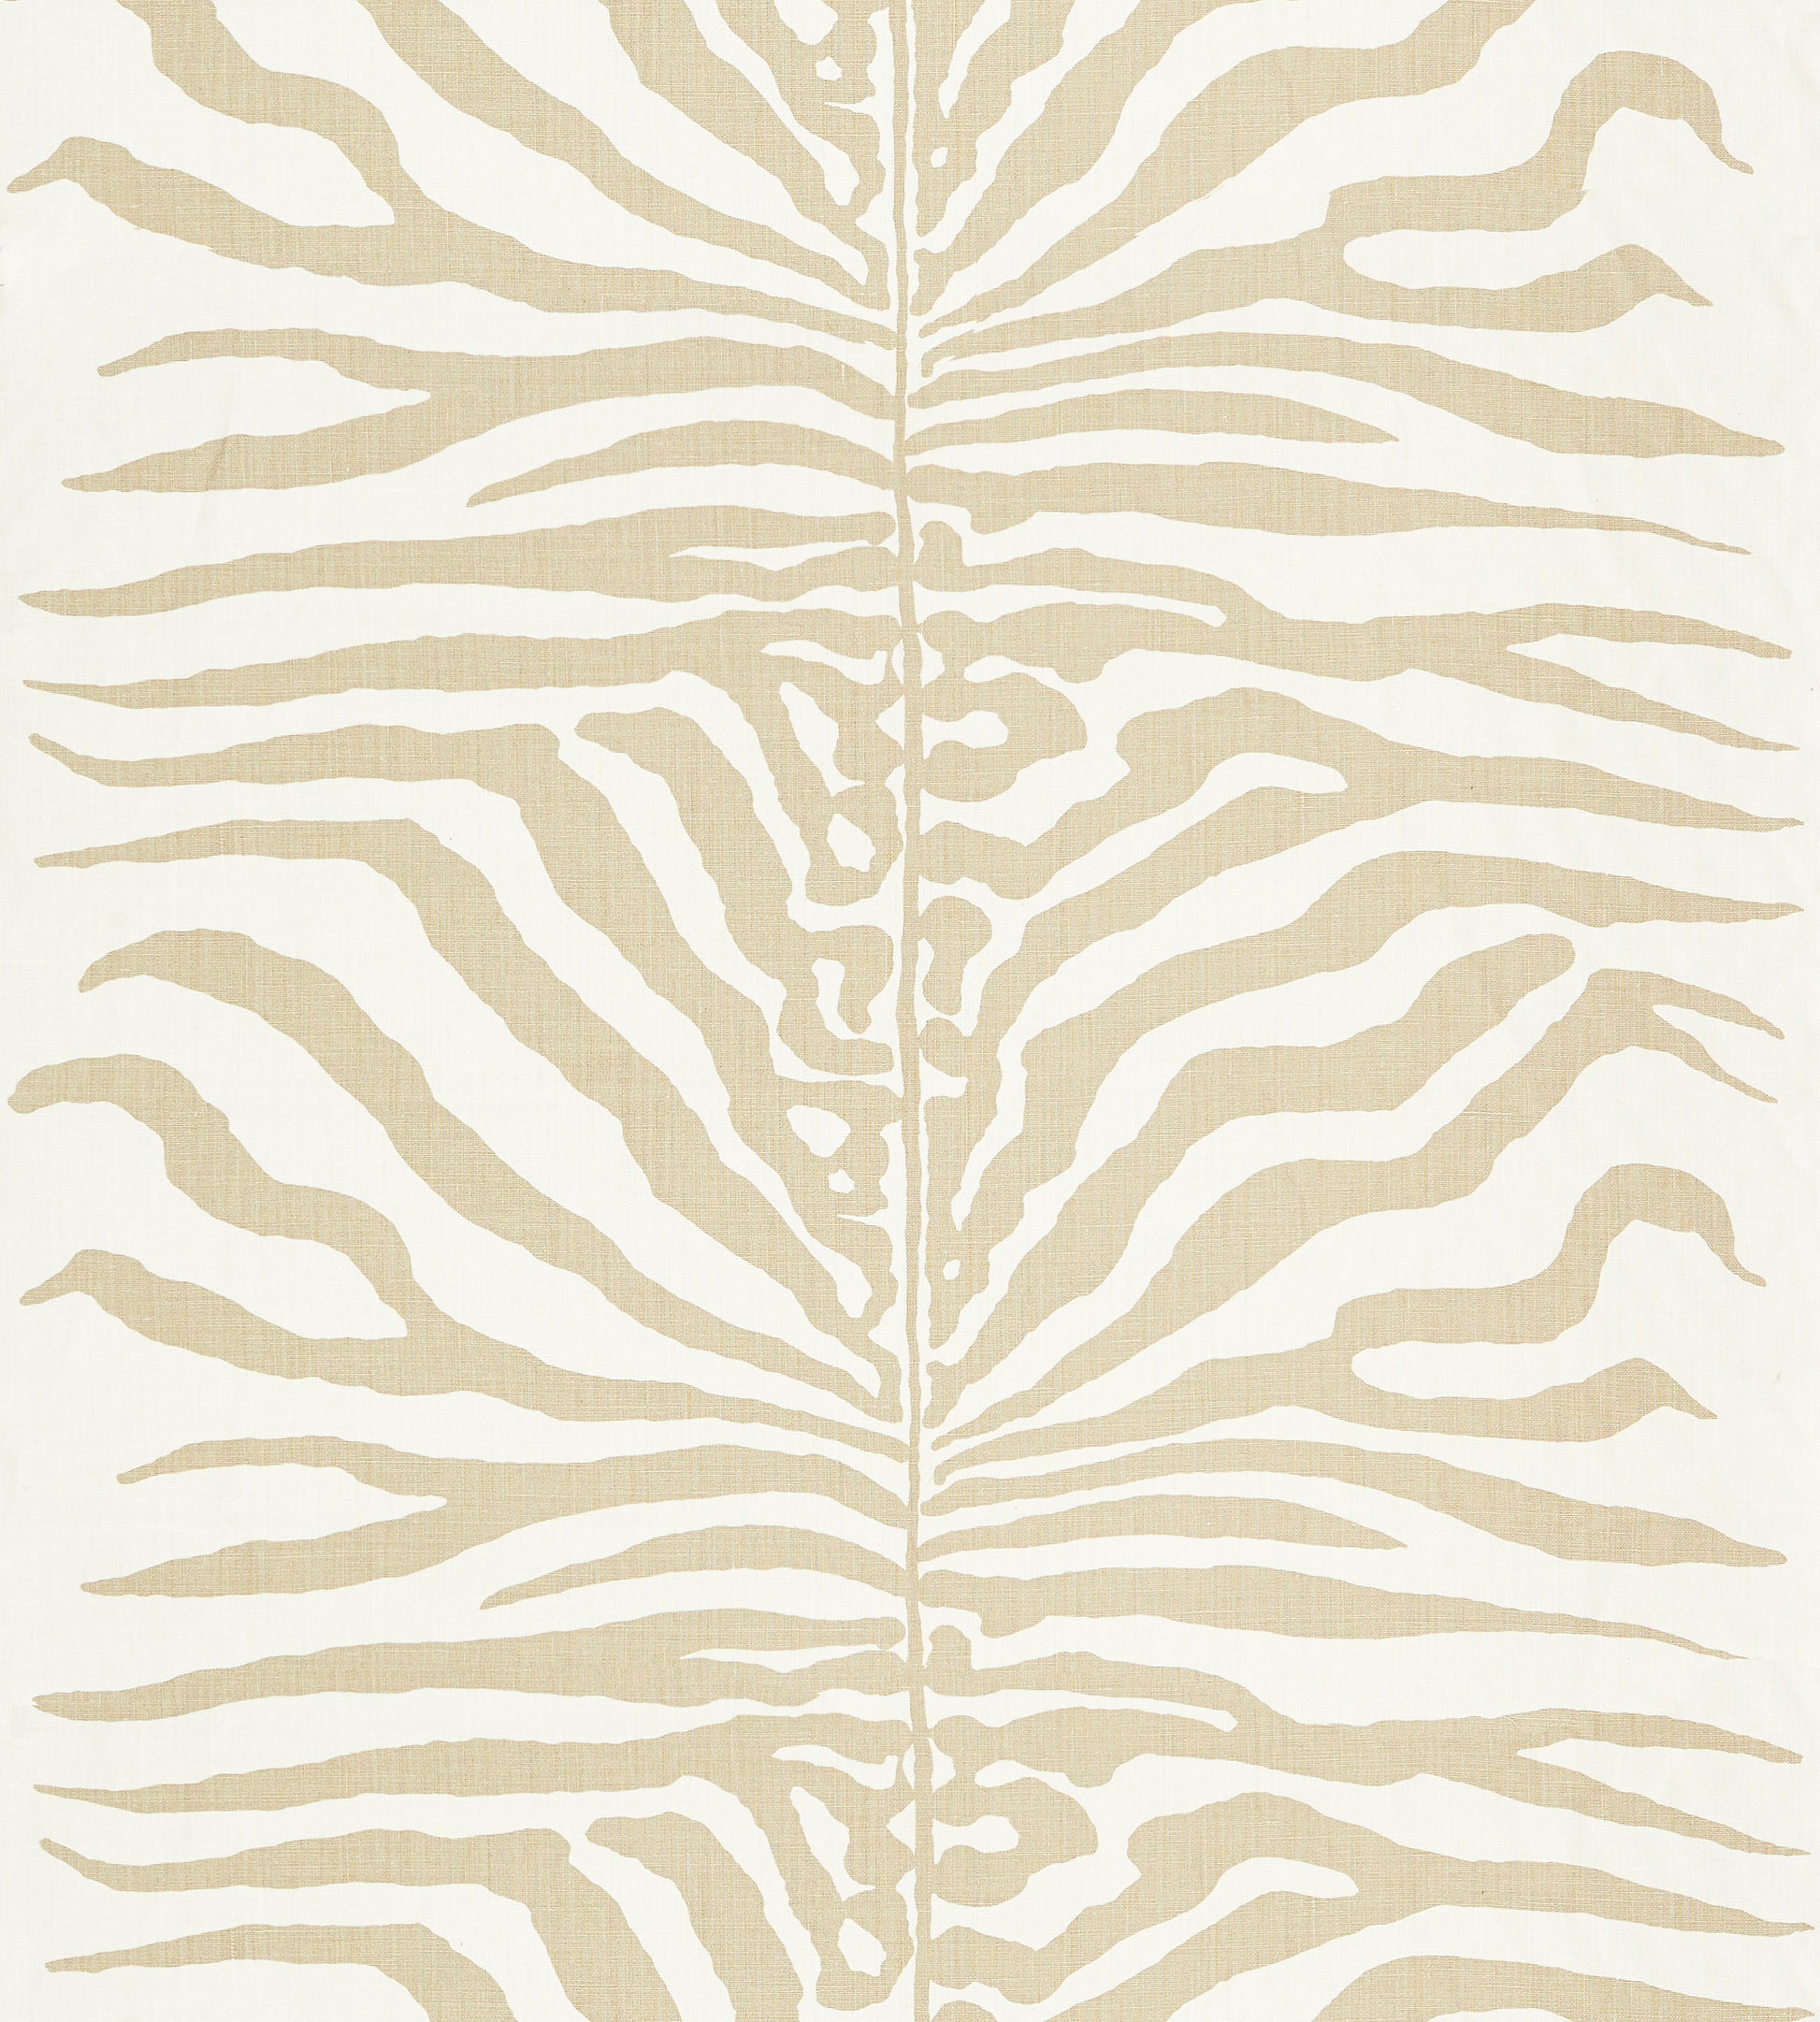 Purchase Scalamandre Fabric Pattern number SC 000216366M, Zebra Sahara 1